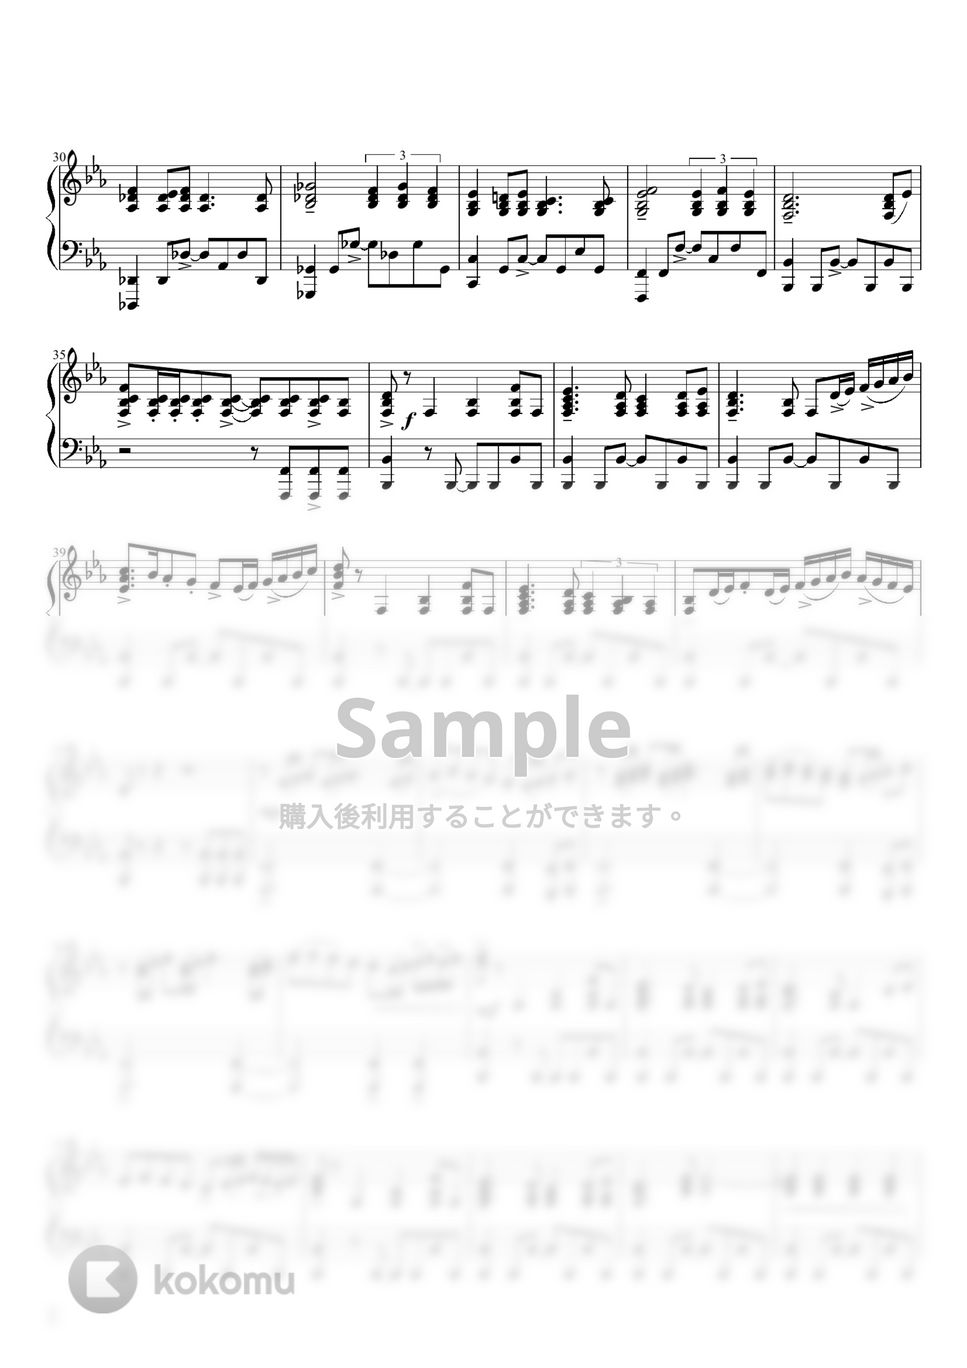 James Barnes - アルヴァマー序曲  Alvamar Overture (ピアノソロ / 上級アレンジ) by ena